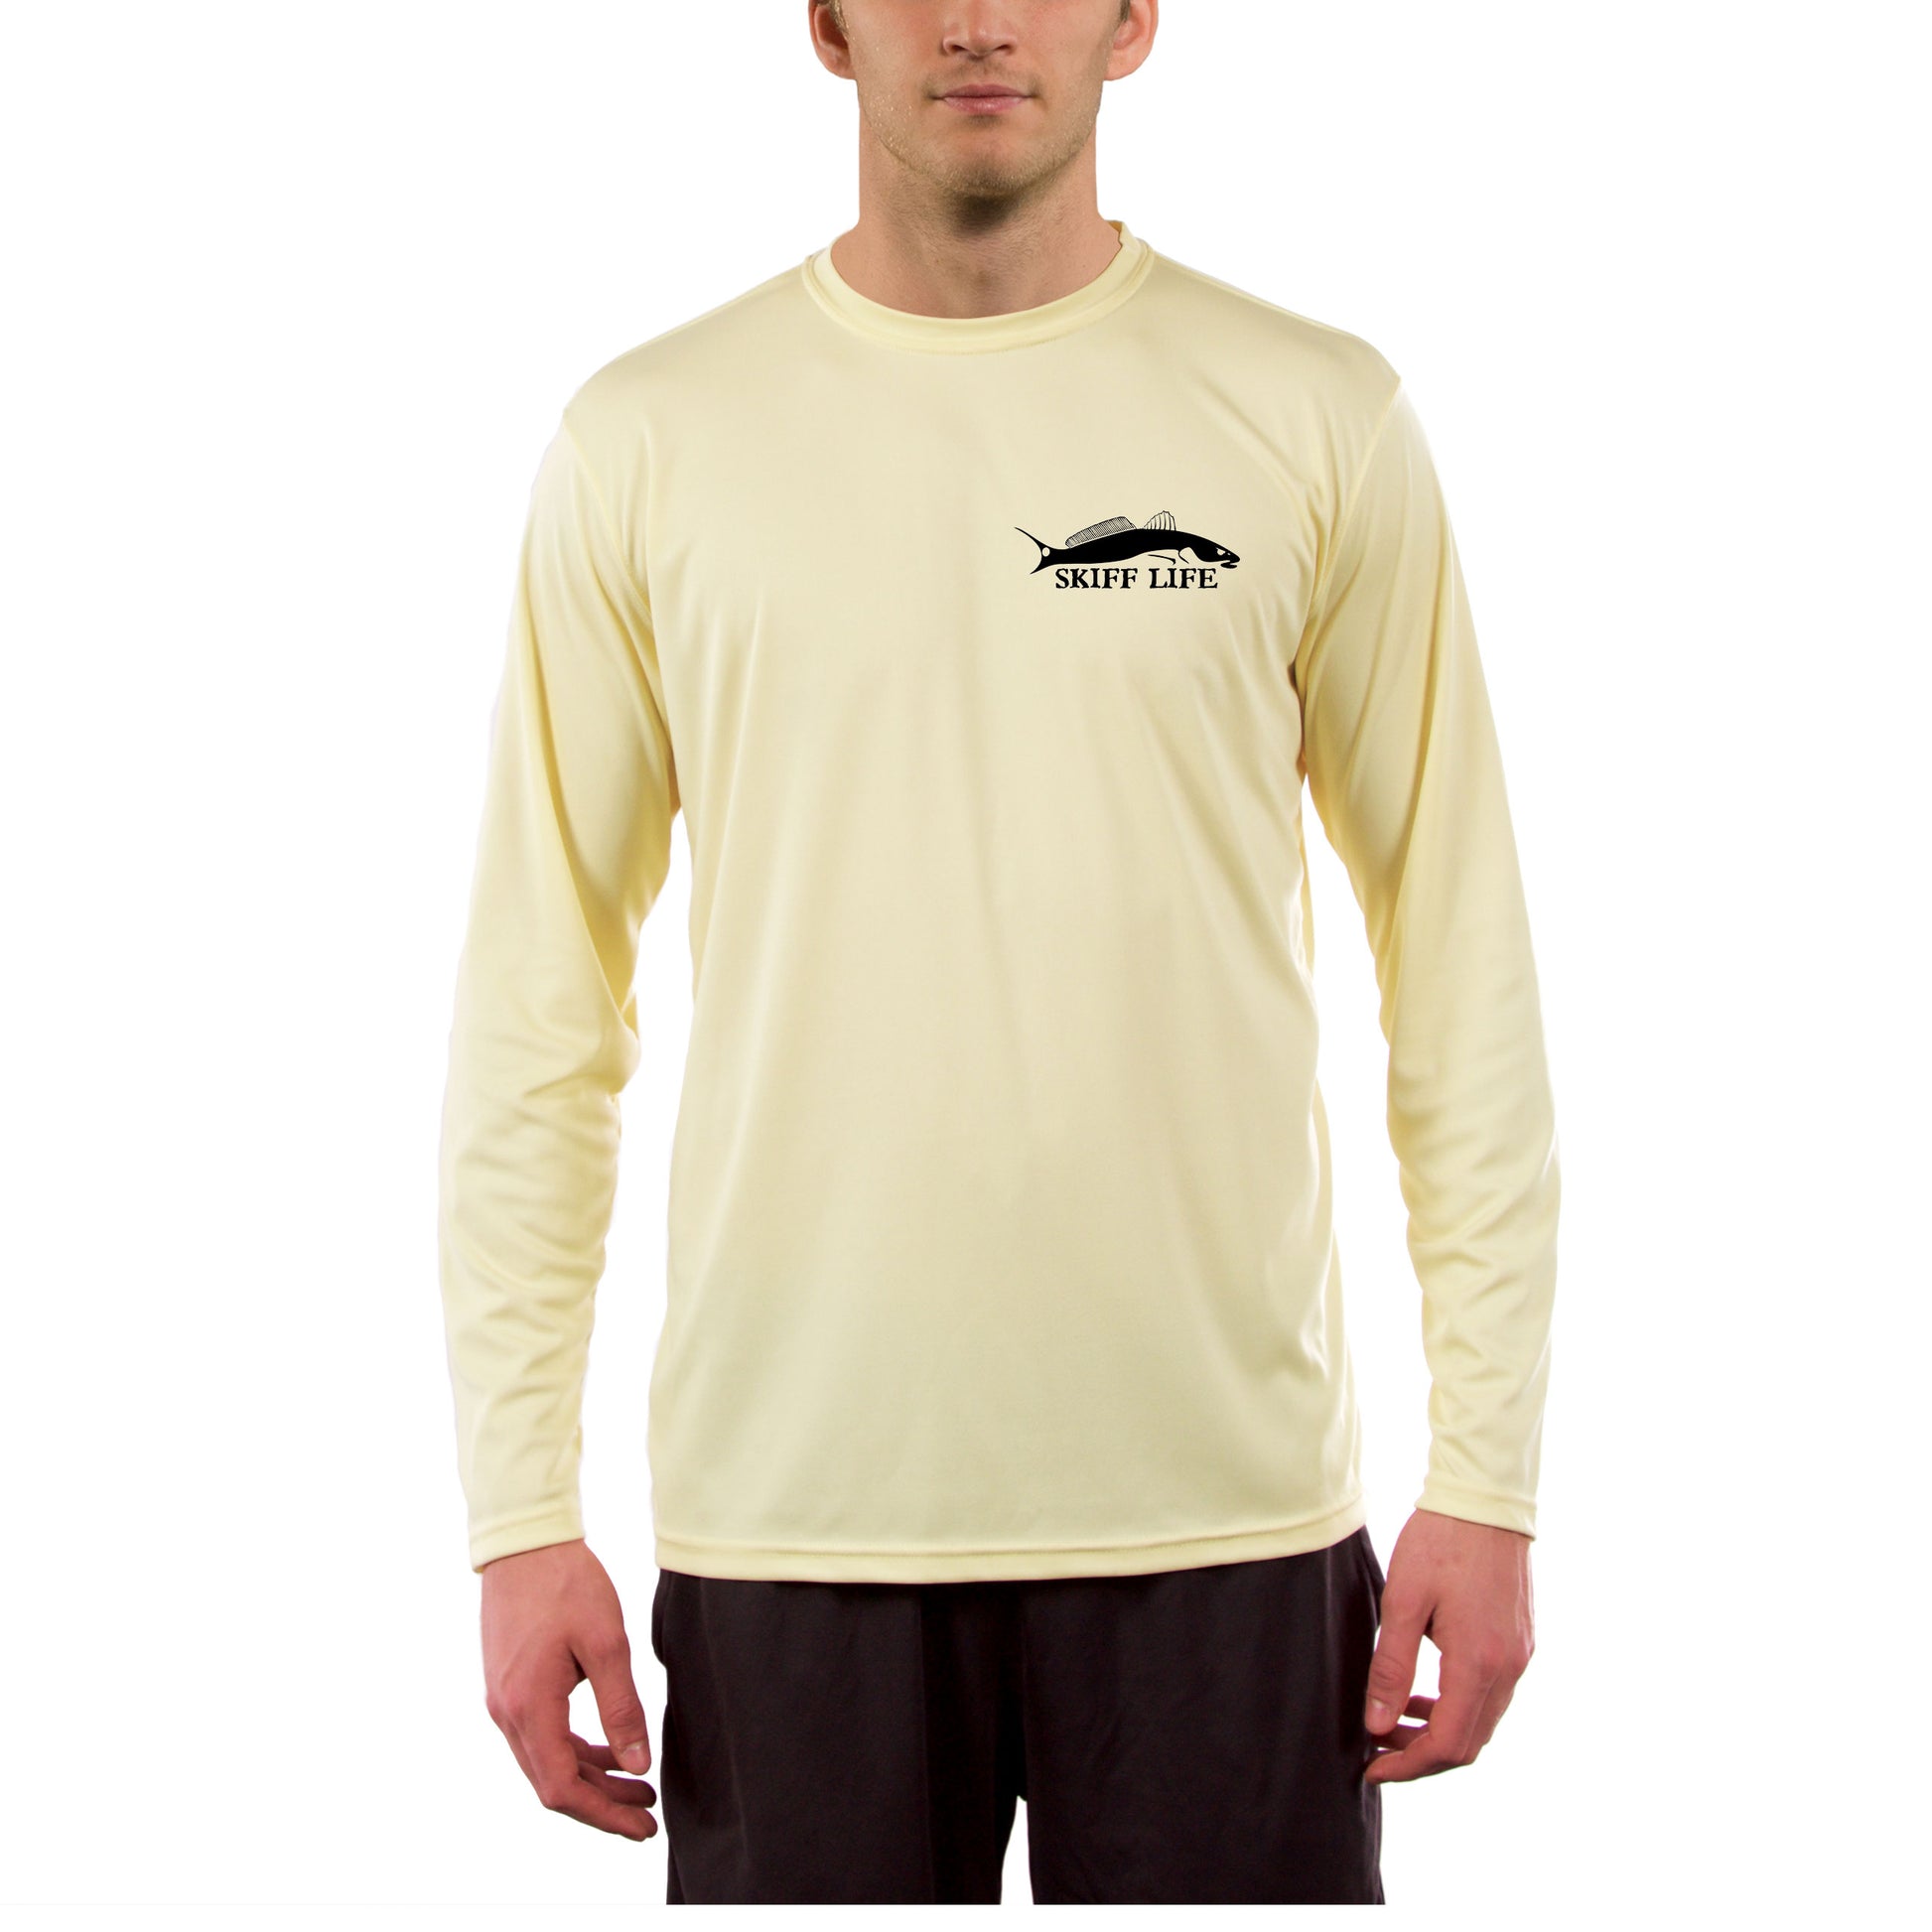 Redfish Sheepshead Design by Randy McGovern Fishing Shirts for Men Yellow / 2XL